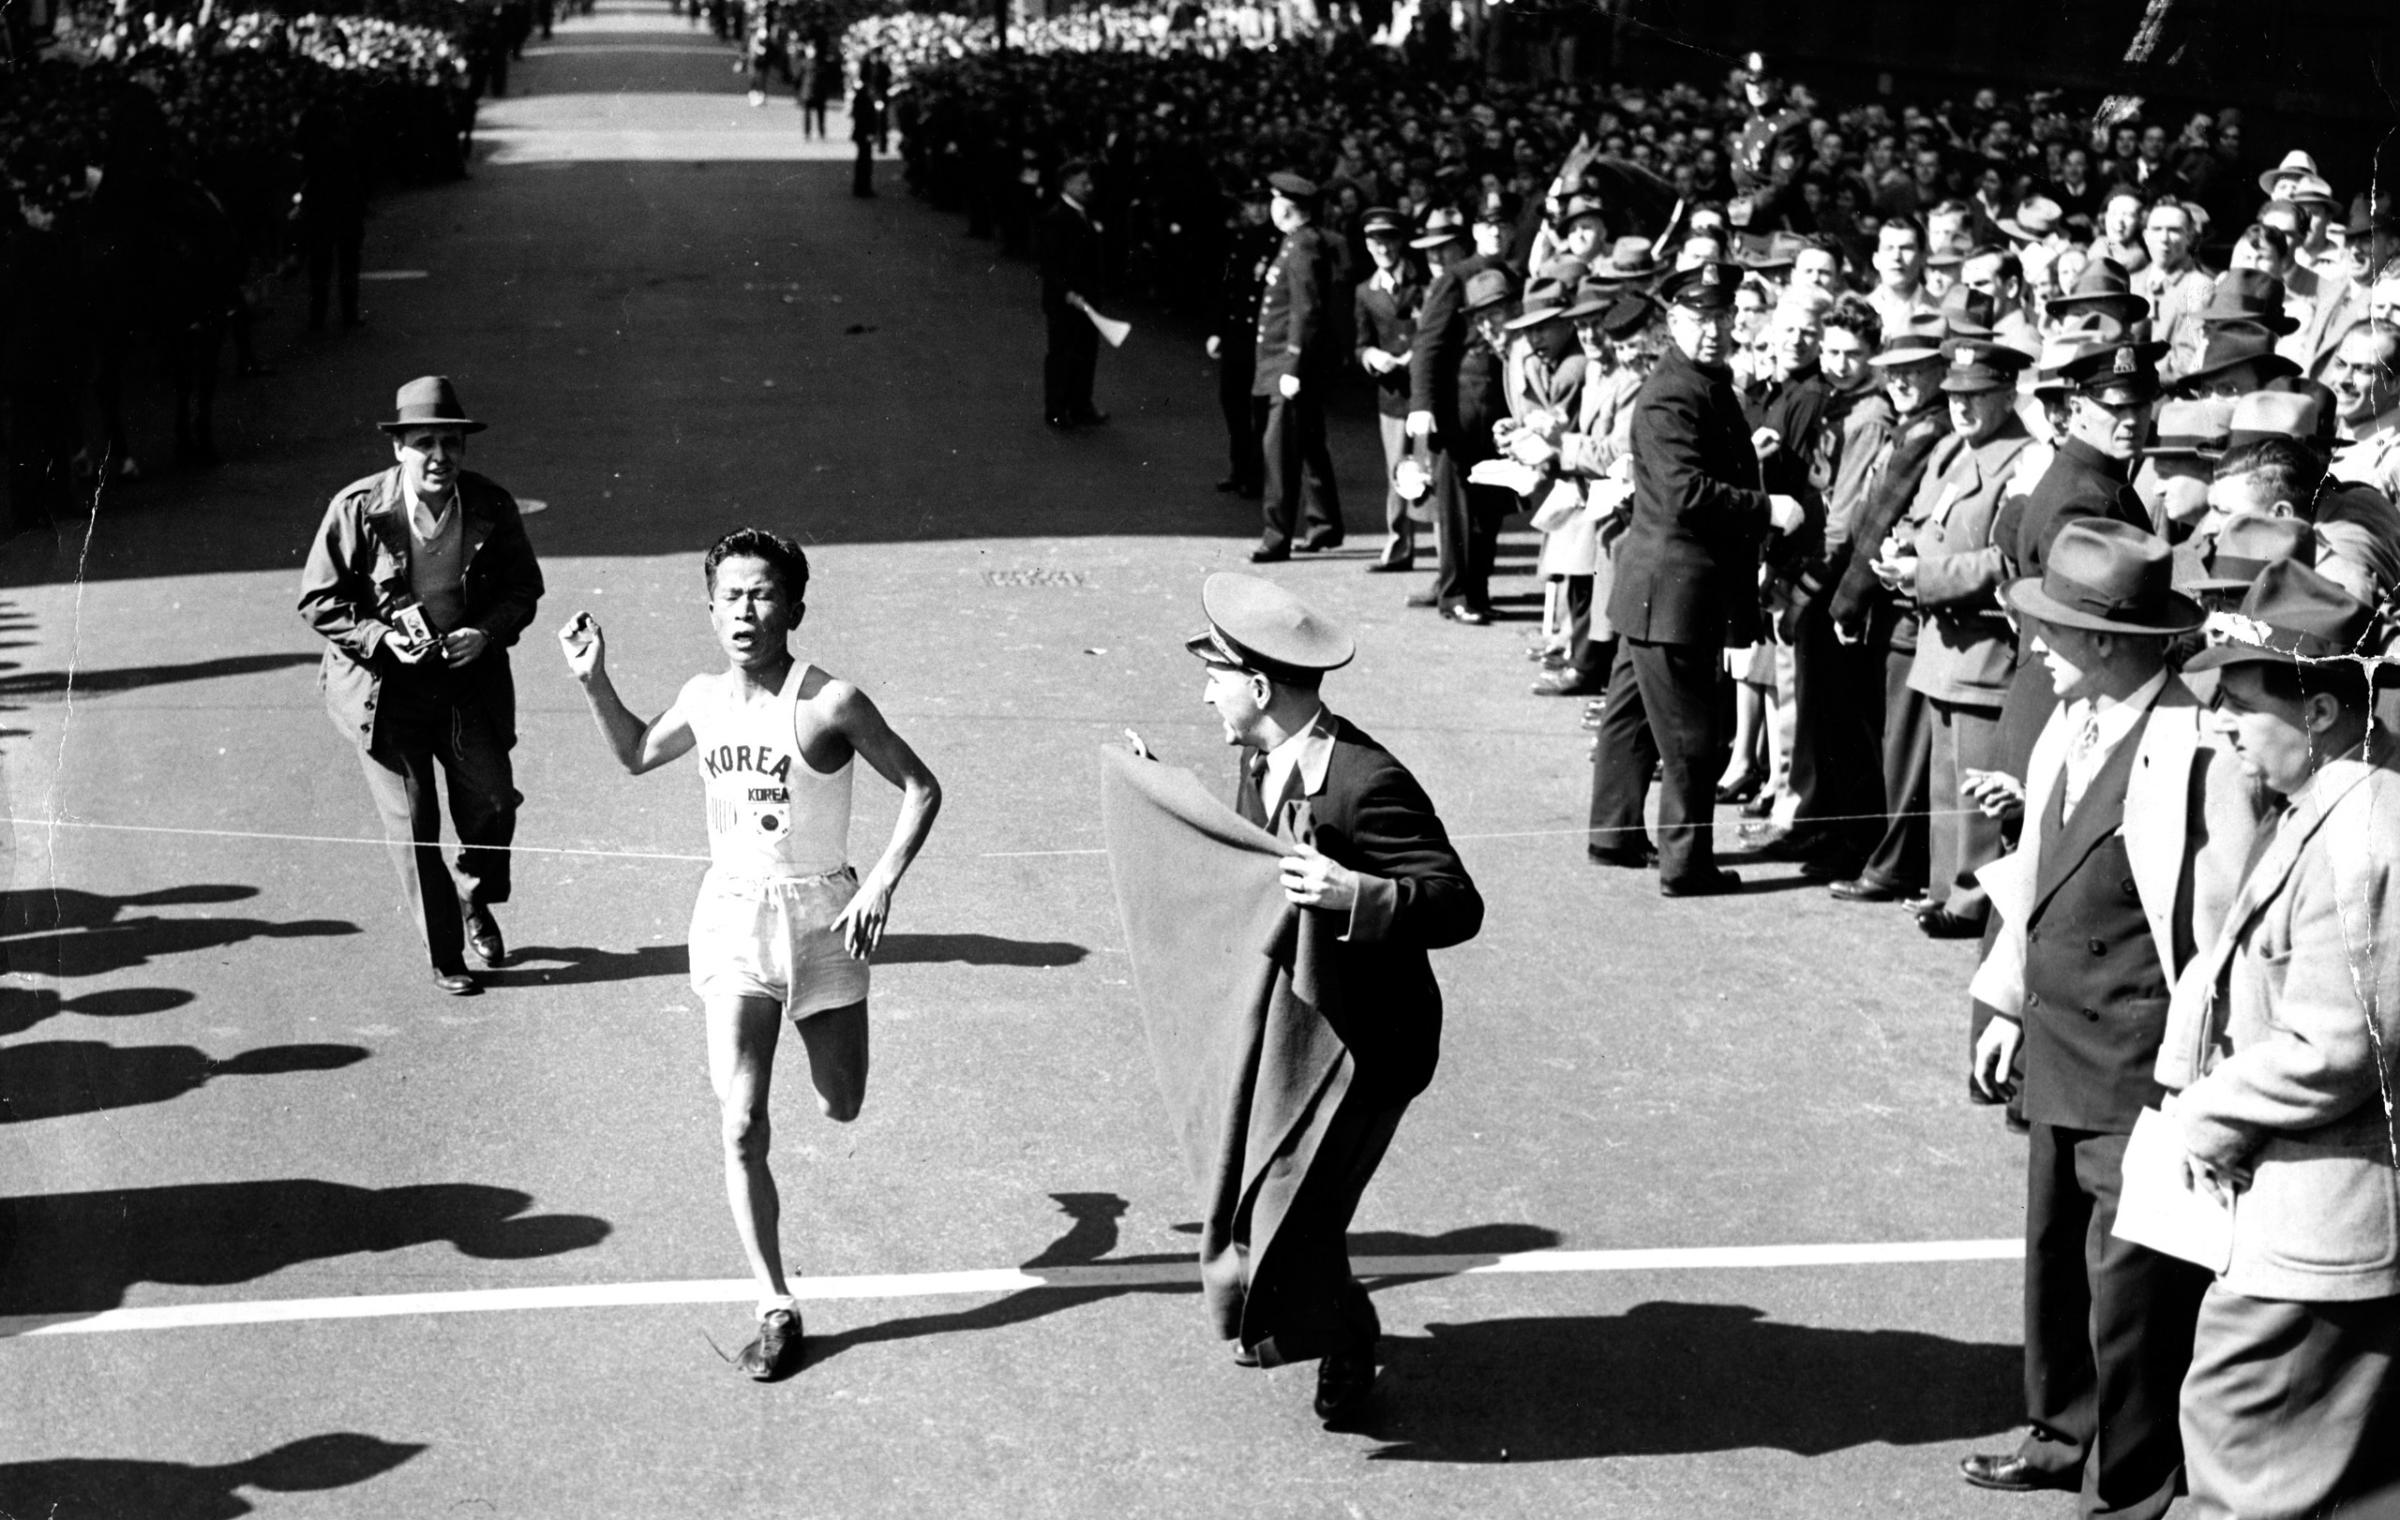 Suh Yun-bok, 24, of South Korea, crosses the finish line, setting a new record in the Boston Marathon, 1947.